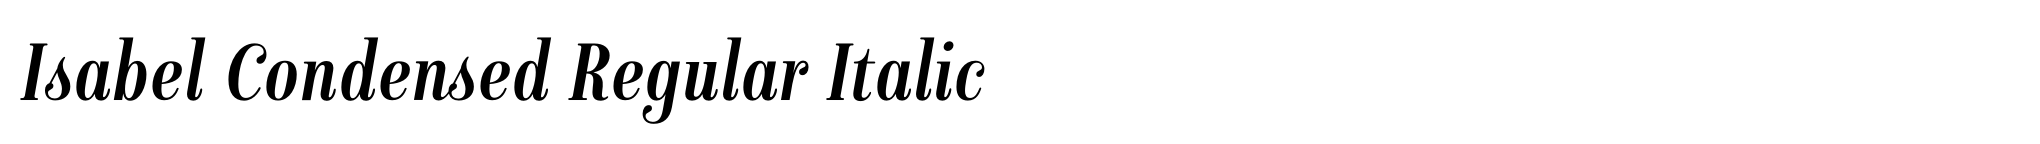 Isabel Condensed Regular Italic image